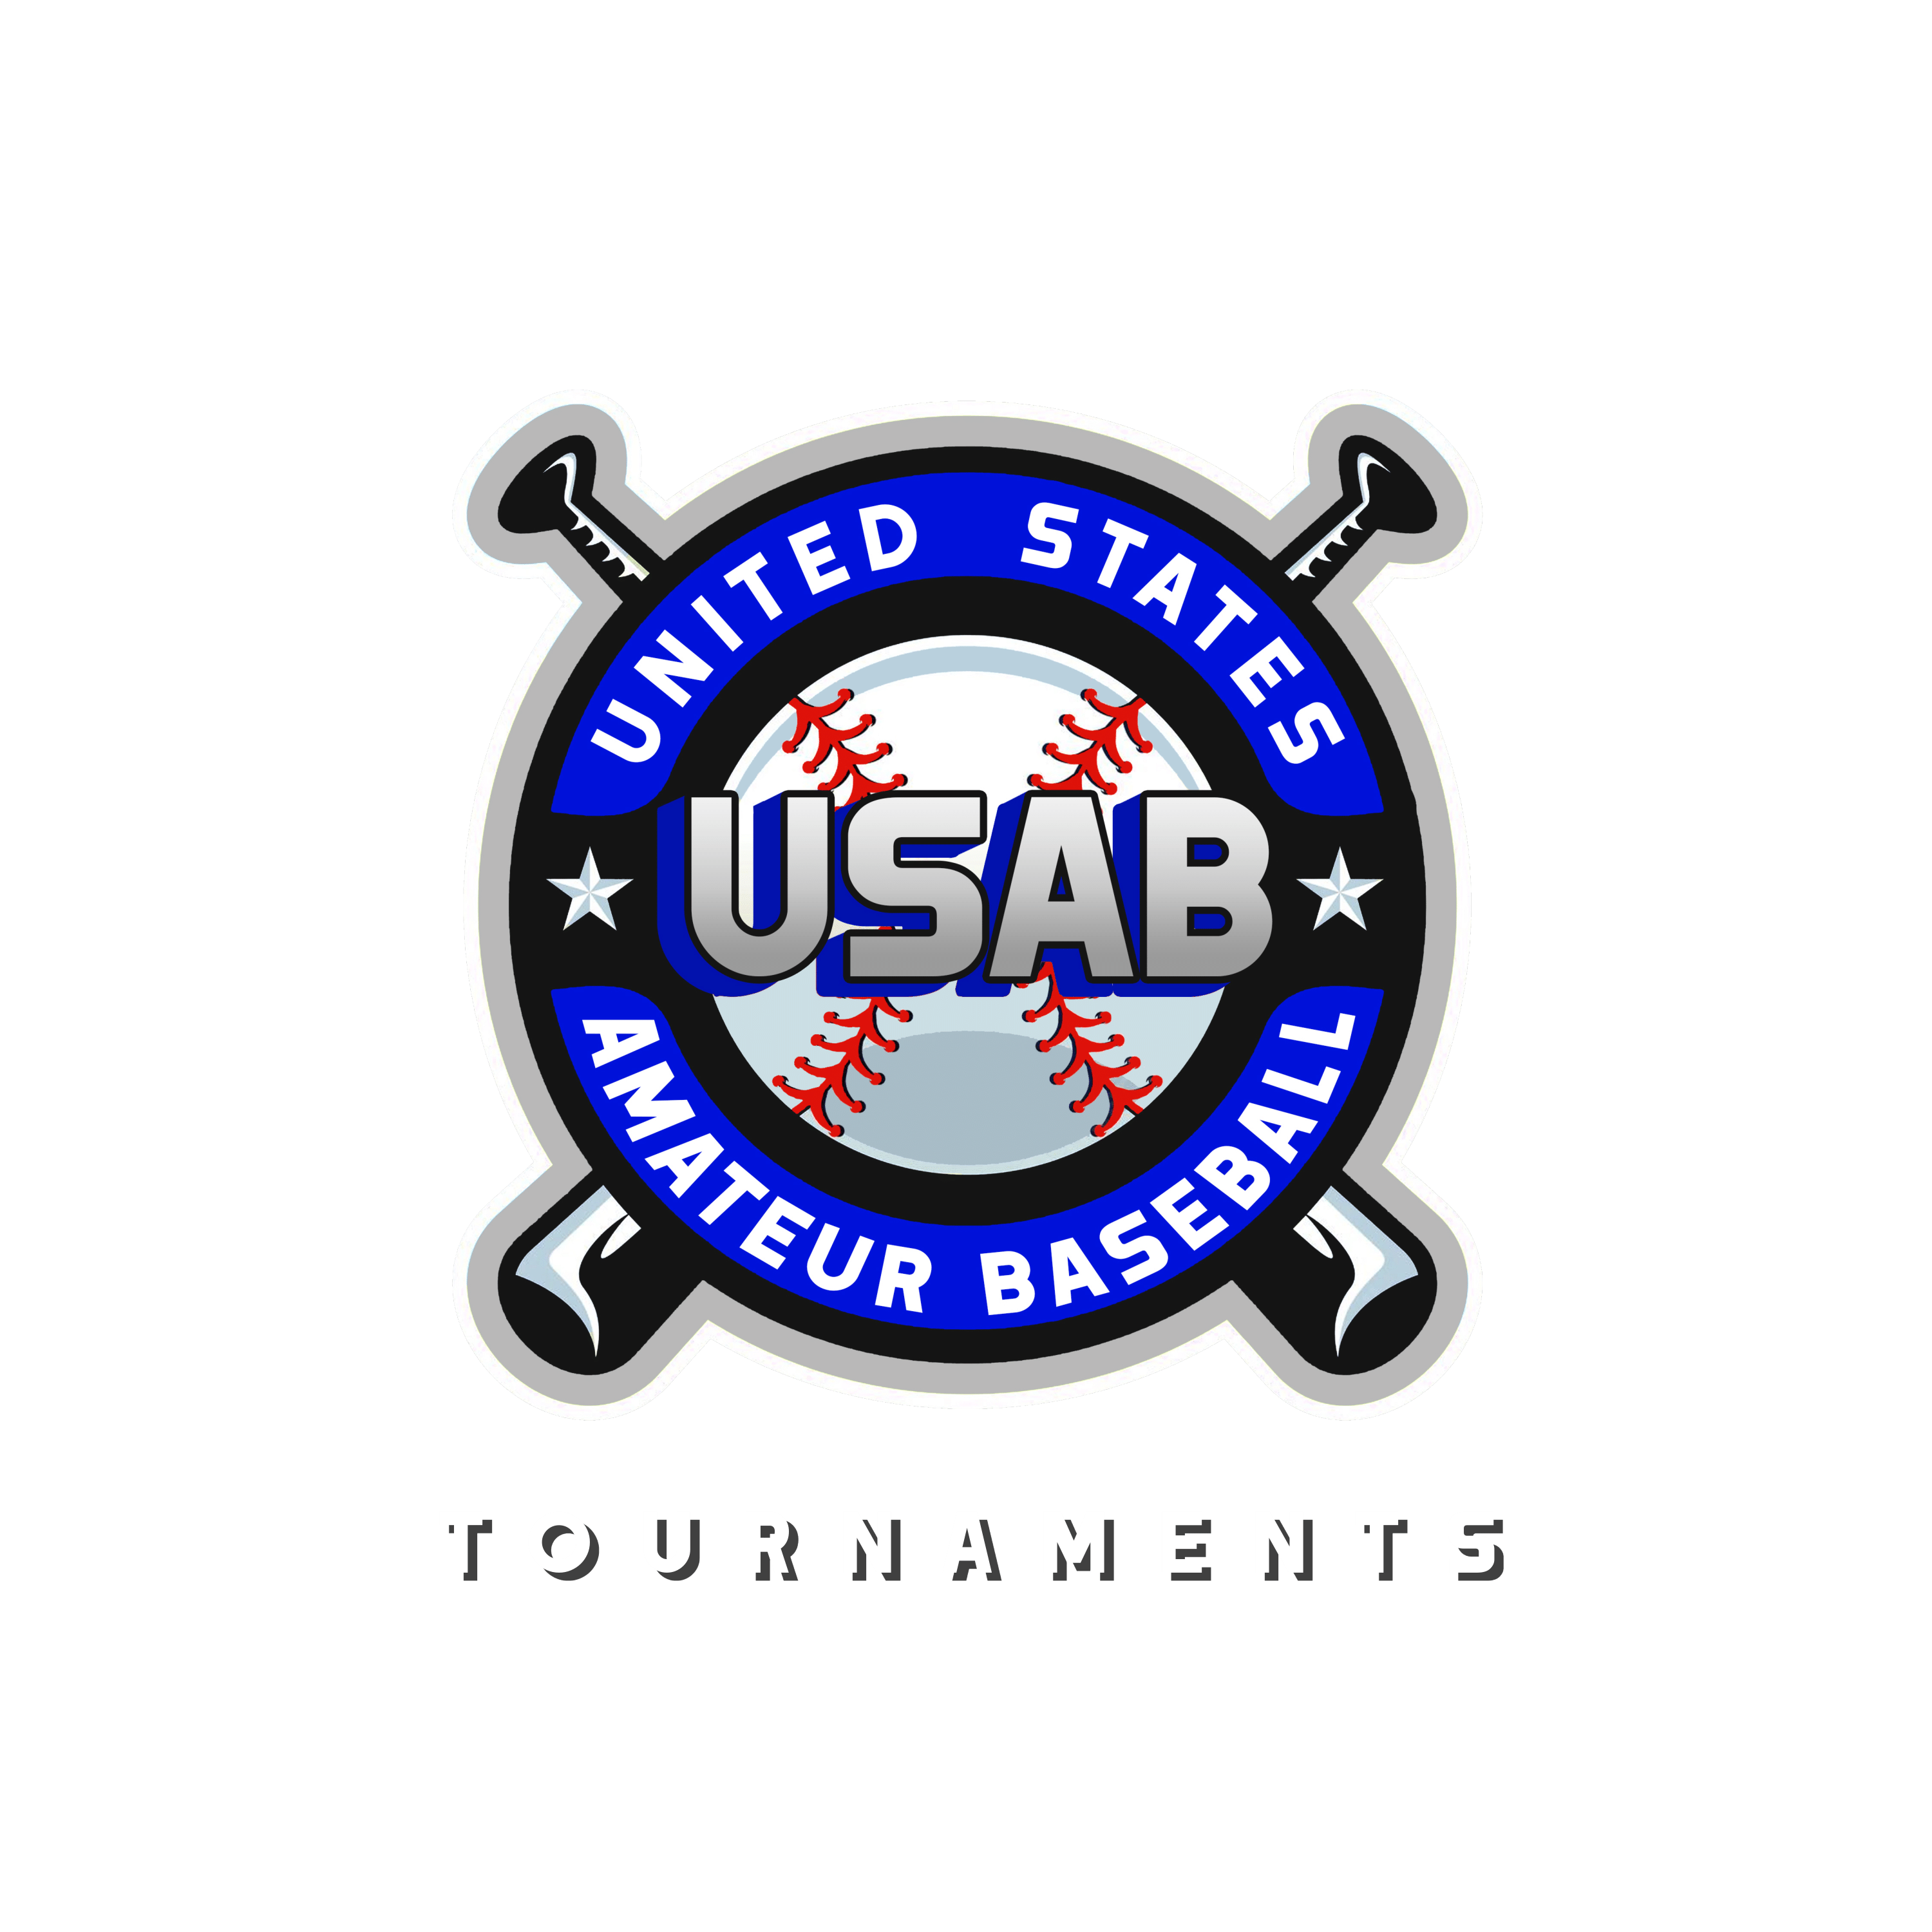 USAB Wood Bat REC ONLY Tournament Logo